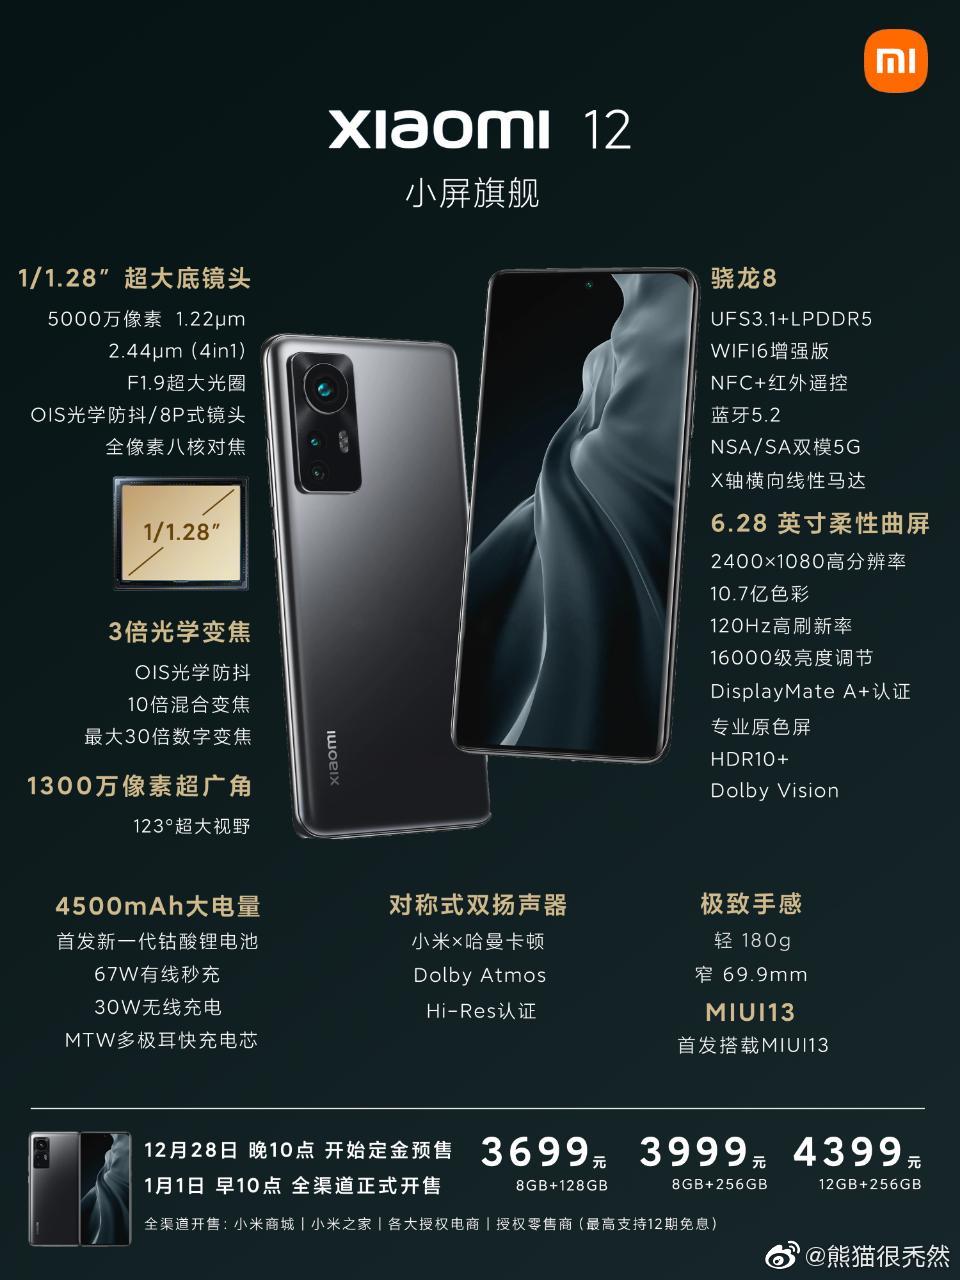 Xiaomi 12 poster segredos revelados - Techenet